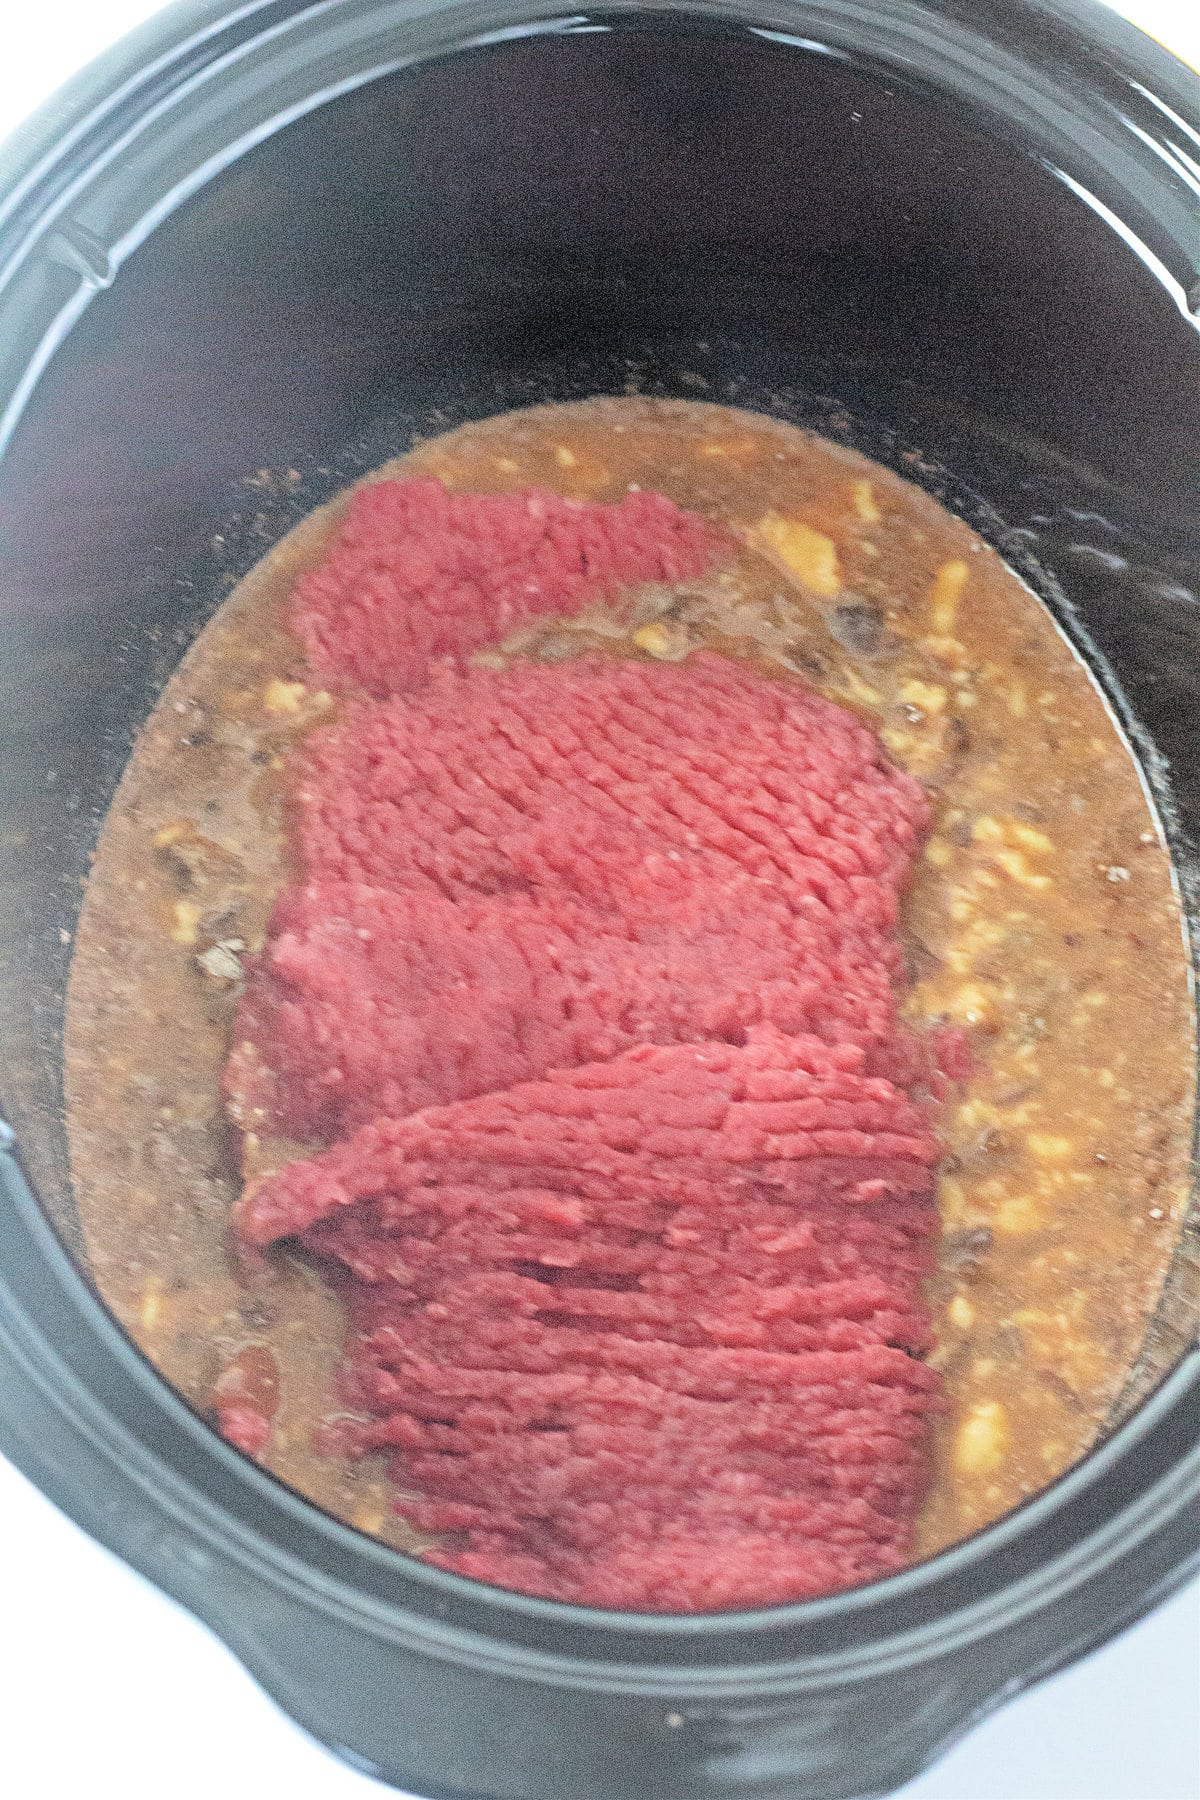 Crock Pot Cube Steak with Gravy on Pinterest.